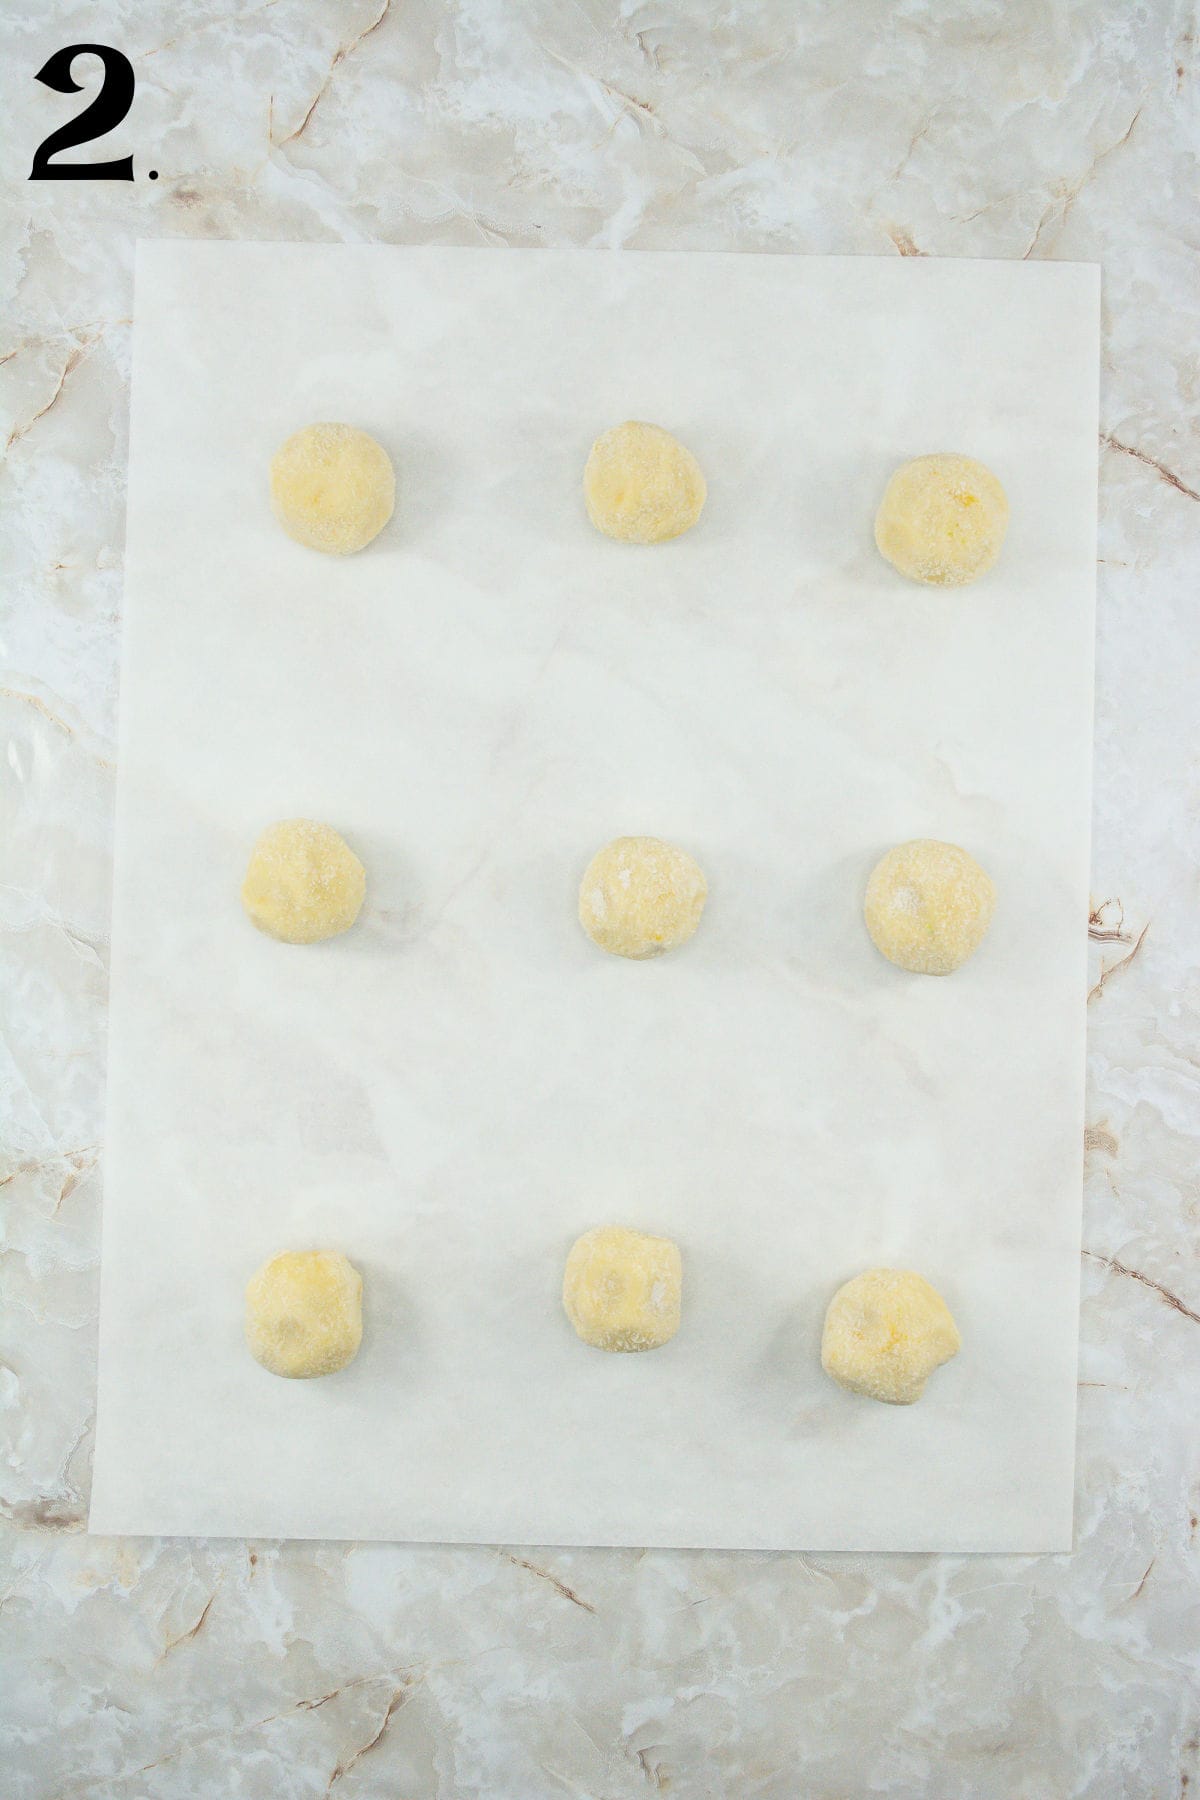 How to Make Lemon Meringue Cookies Step 2 - cookie balls on parchment paper.